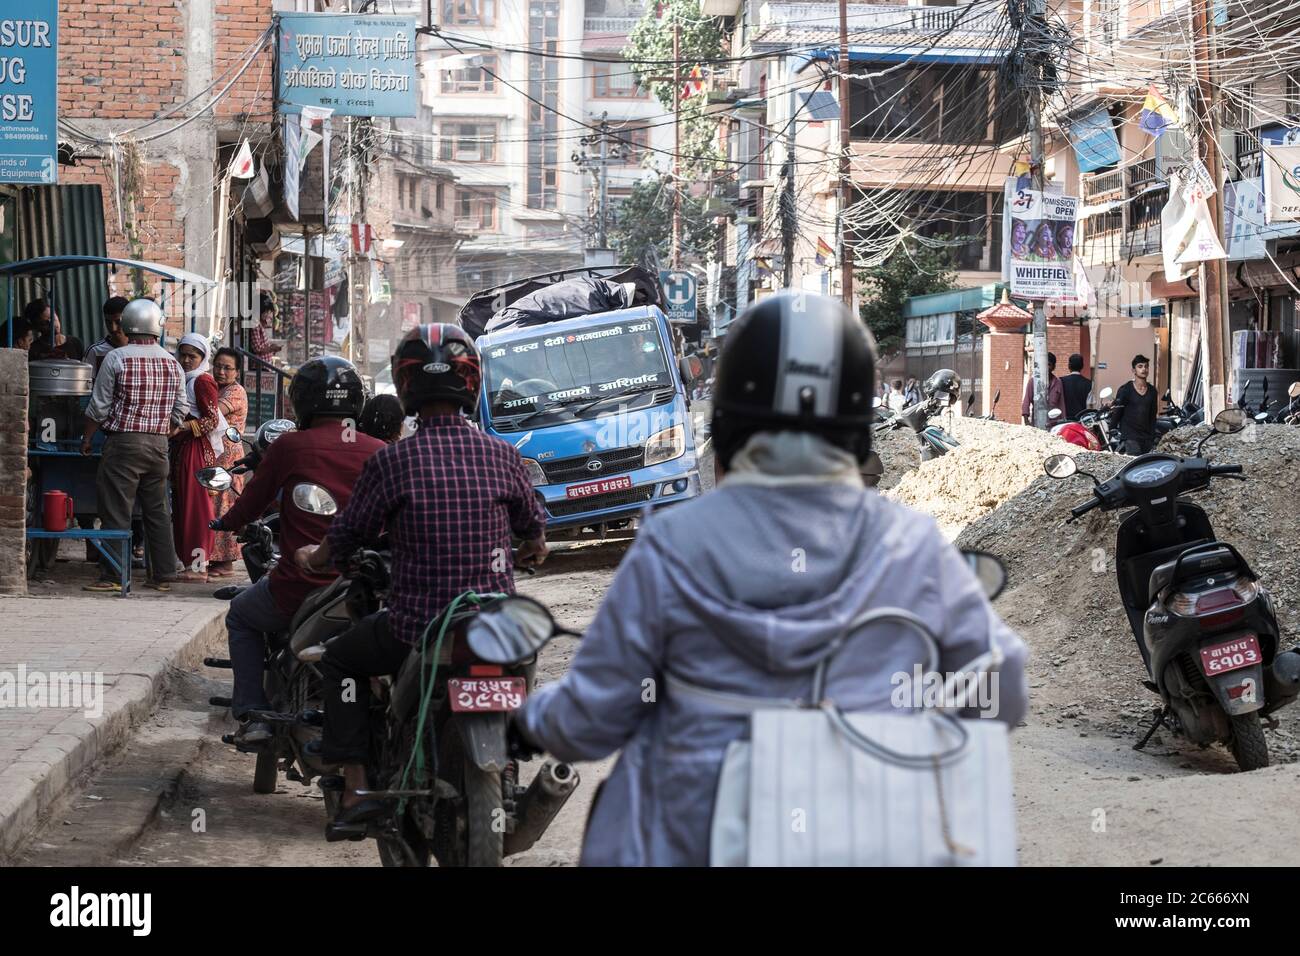 Moped rider in a street in Kathmandu, Nepal Stock Photo